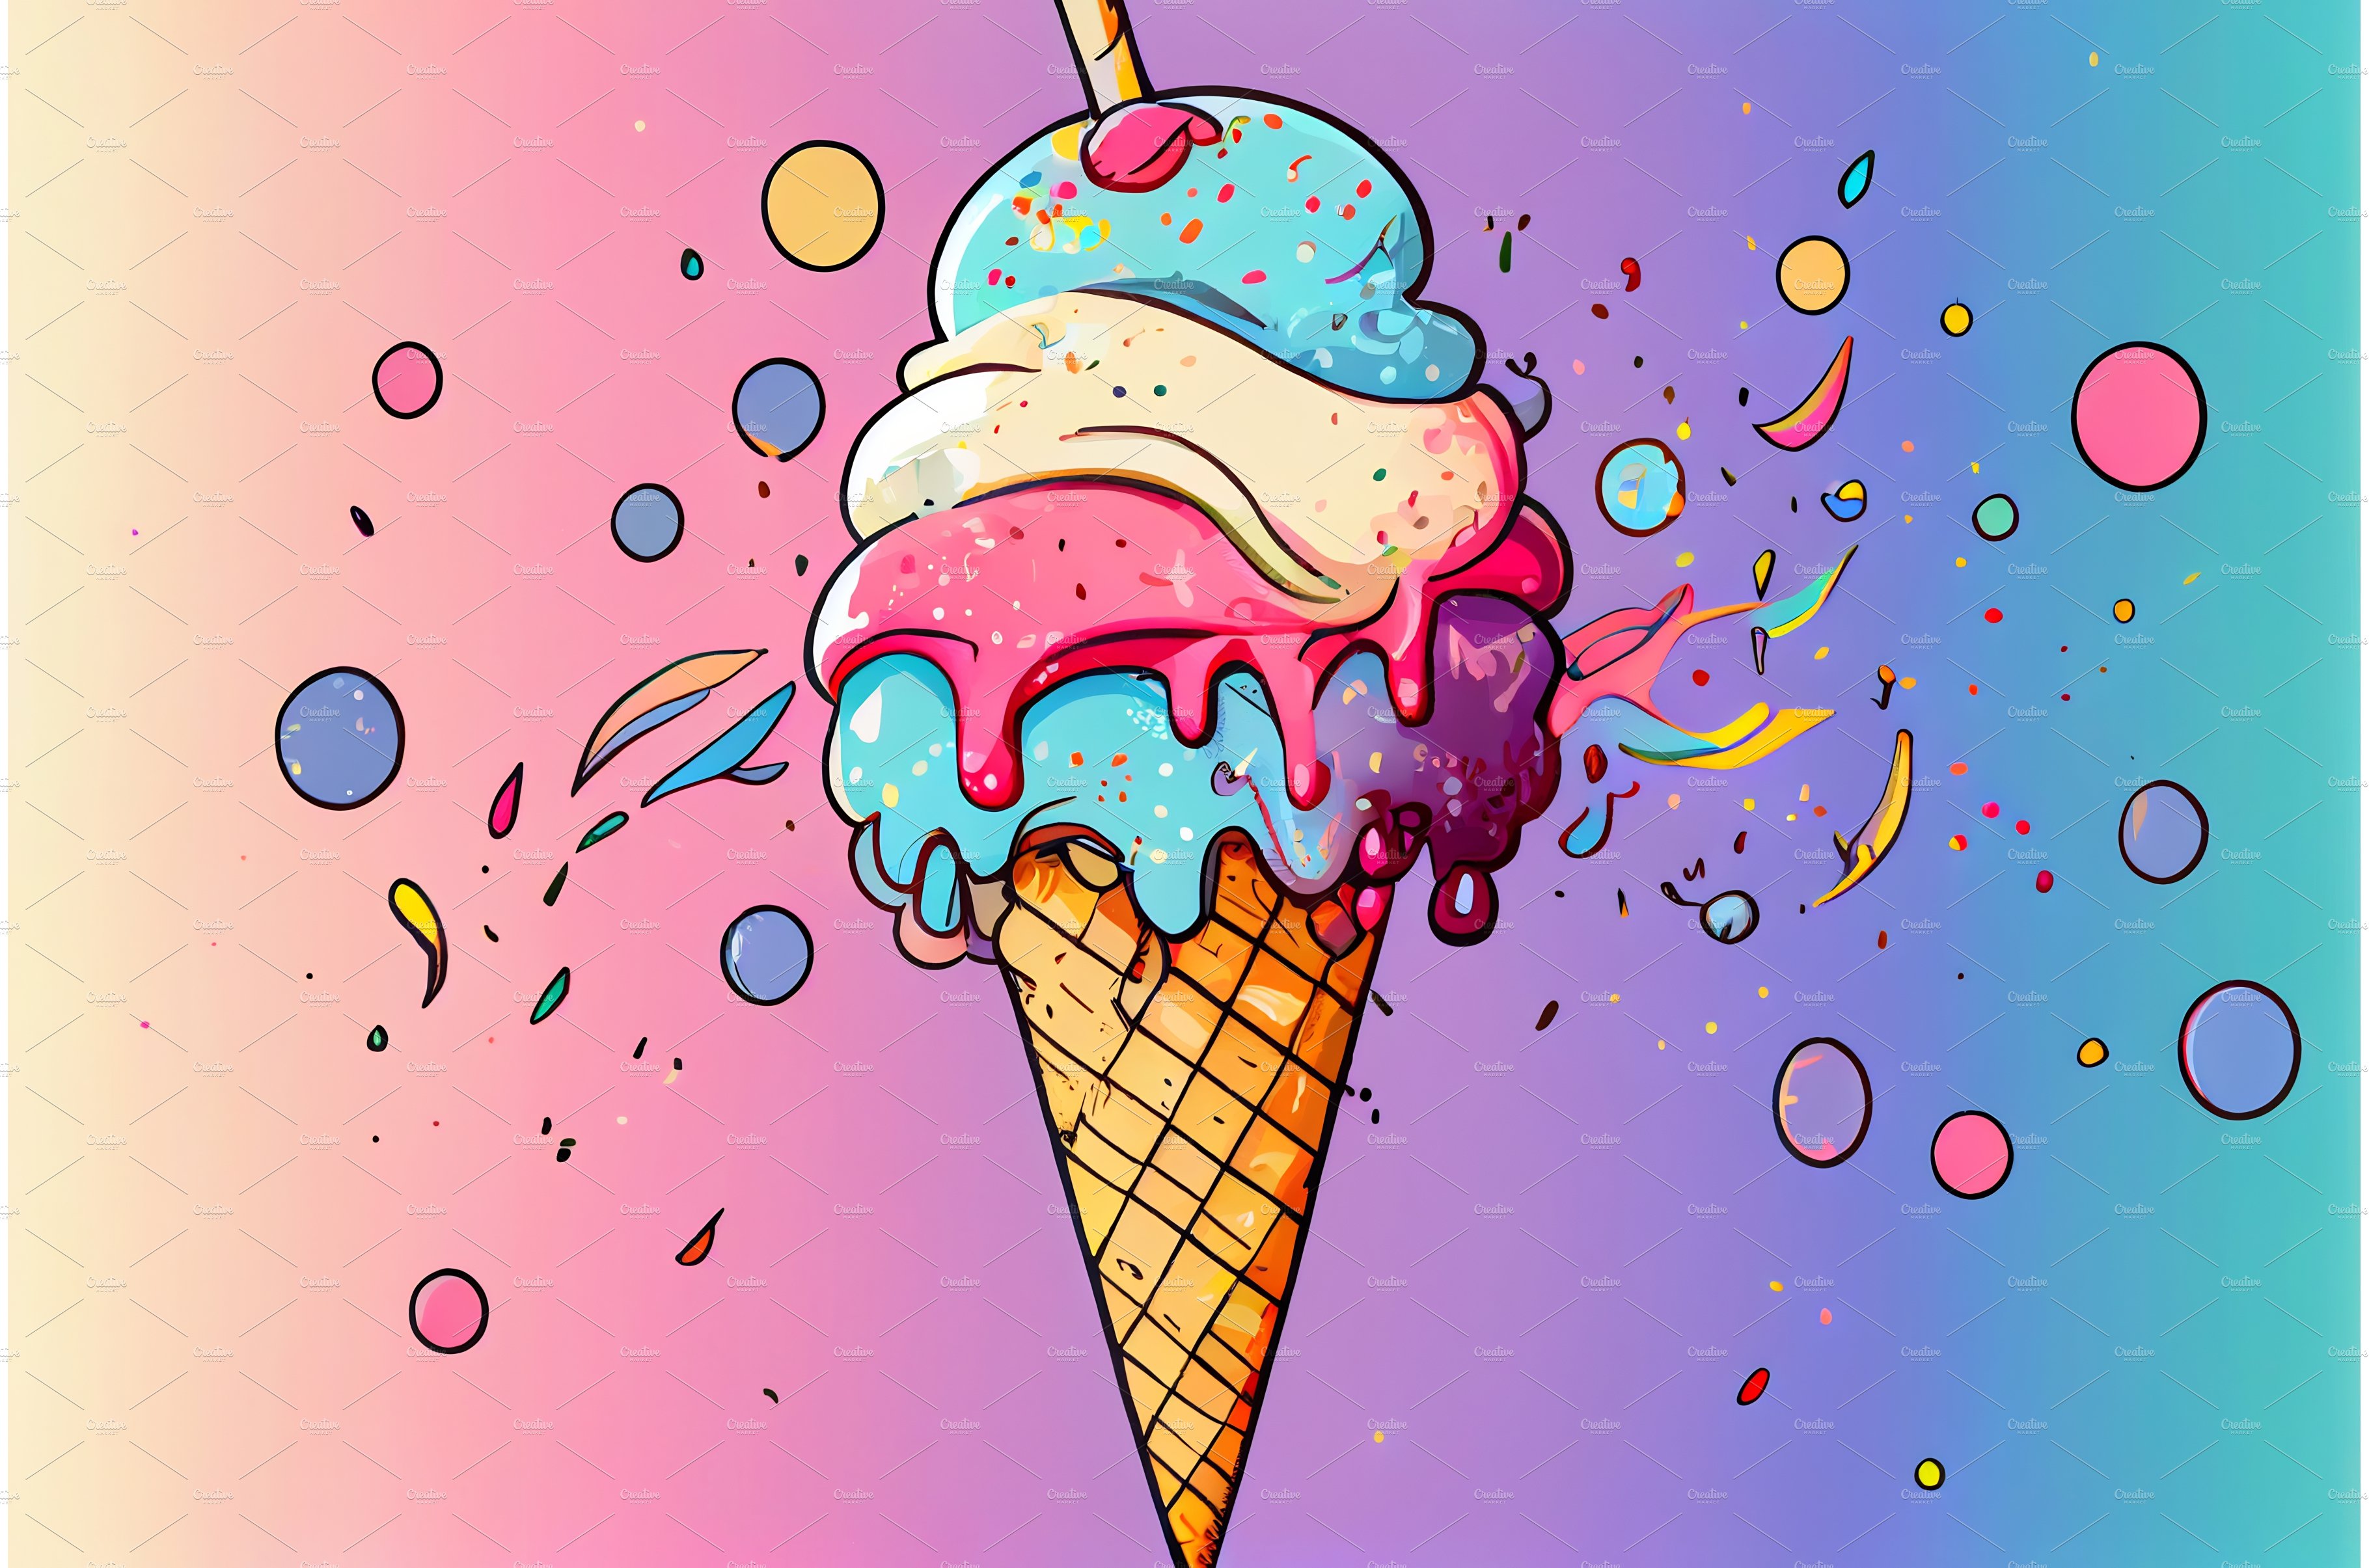 Cartoon illustration of ice cream cover image.